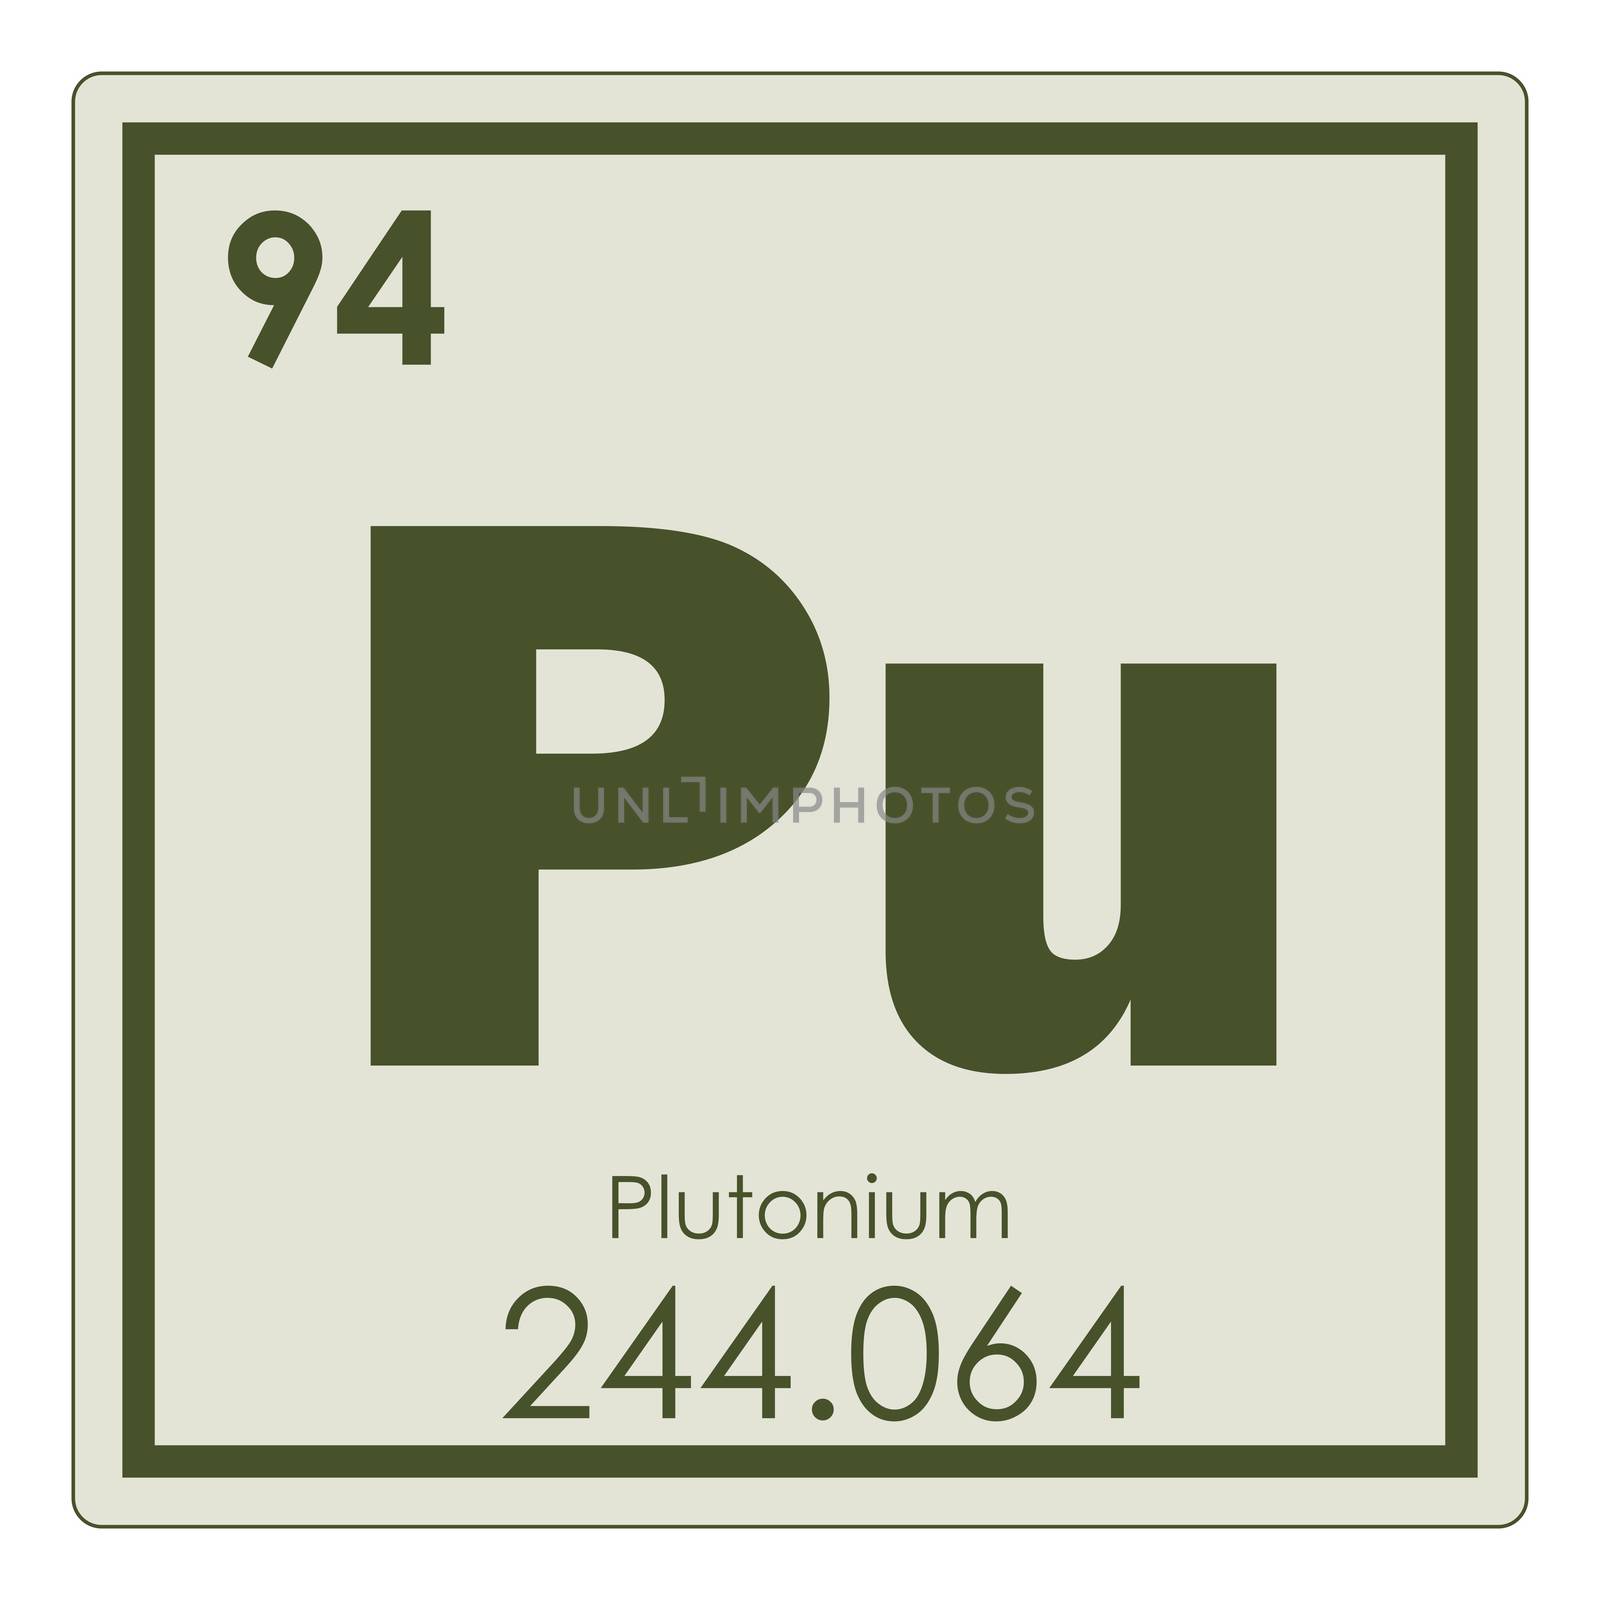 Plutonium chemical element by tony4urban